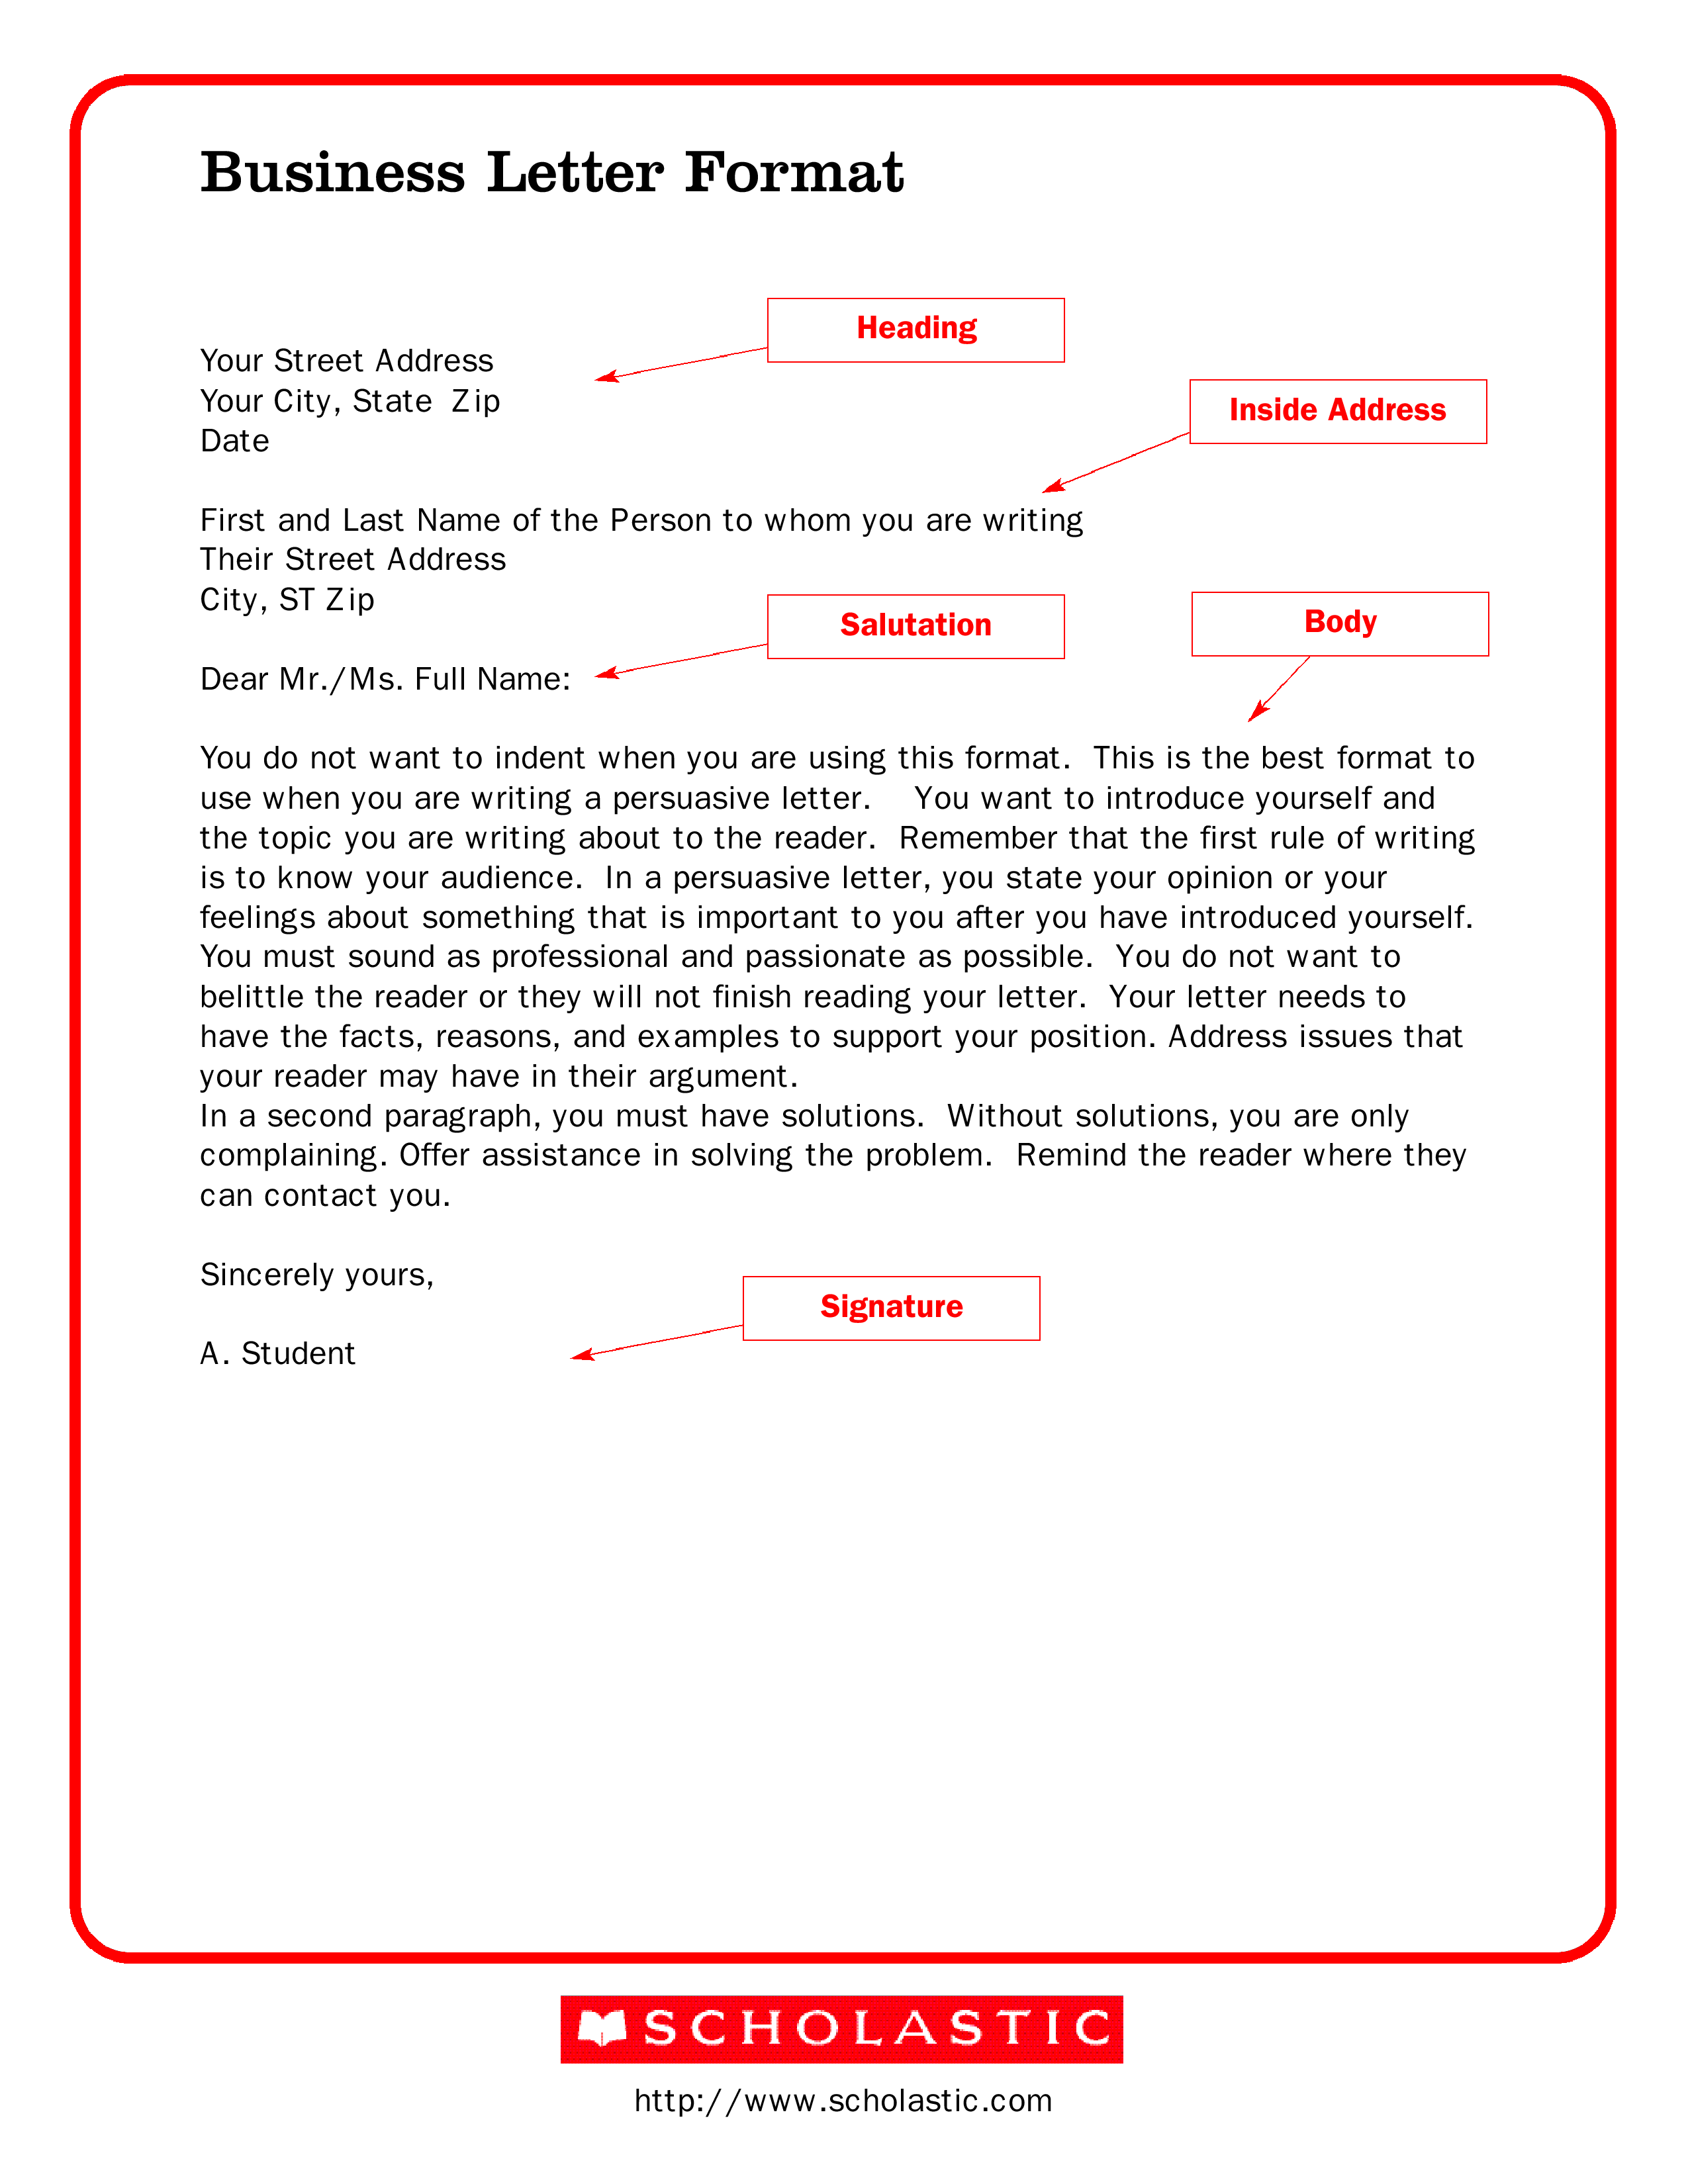 Business Letter Format On Letterhead from www.allbusinesstemplates.com